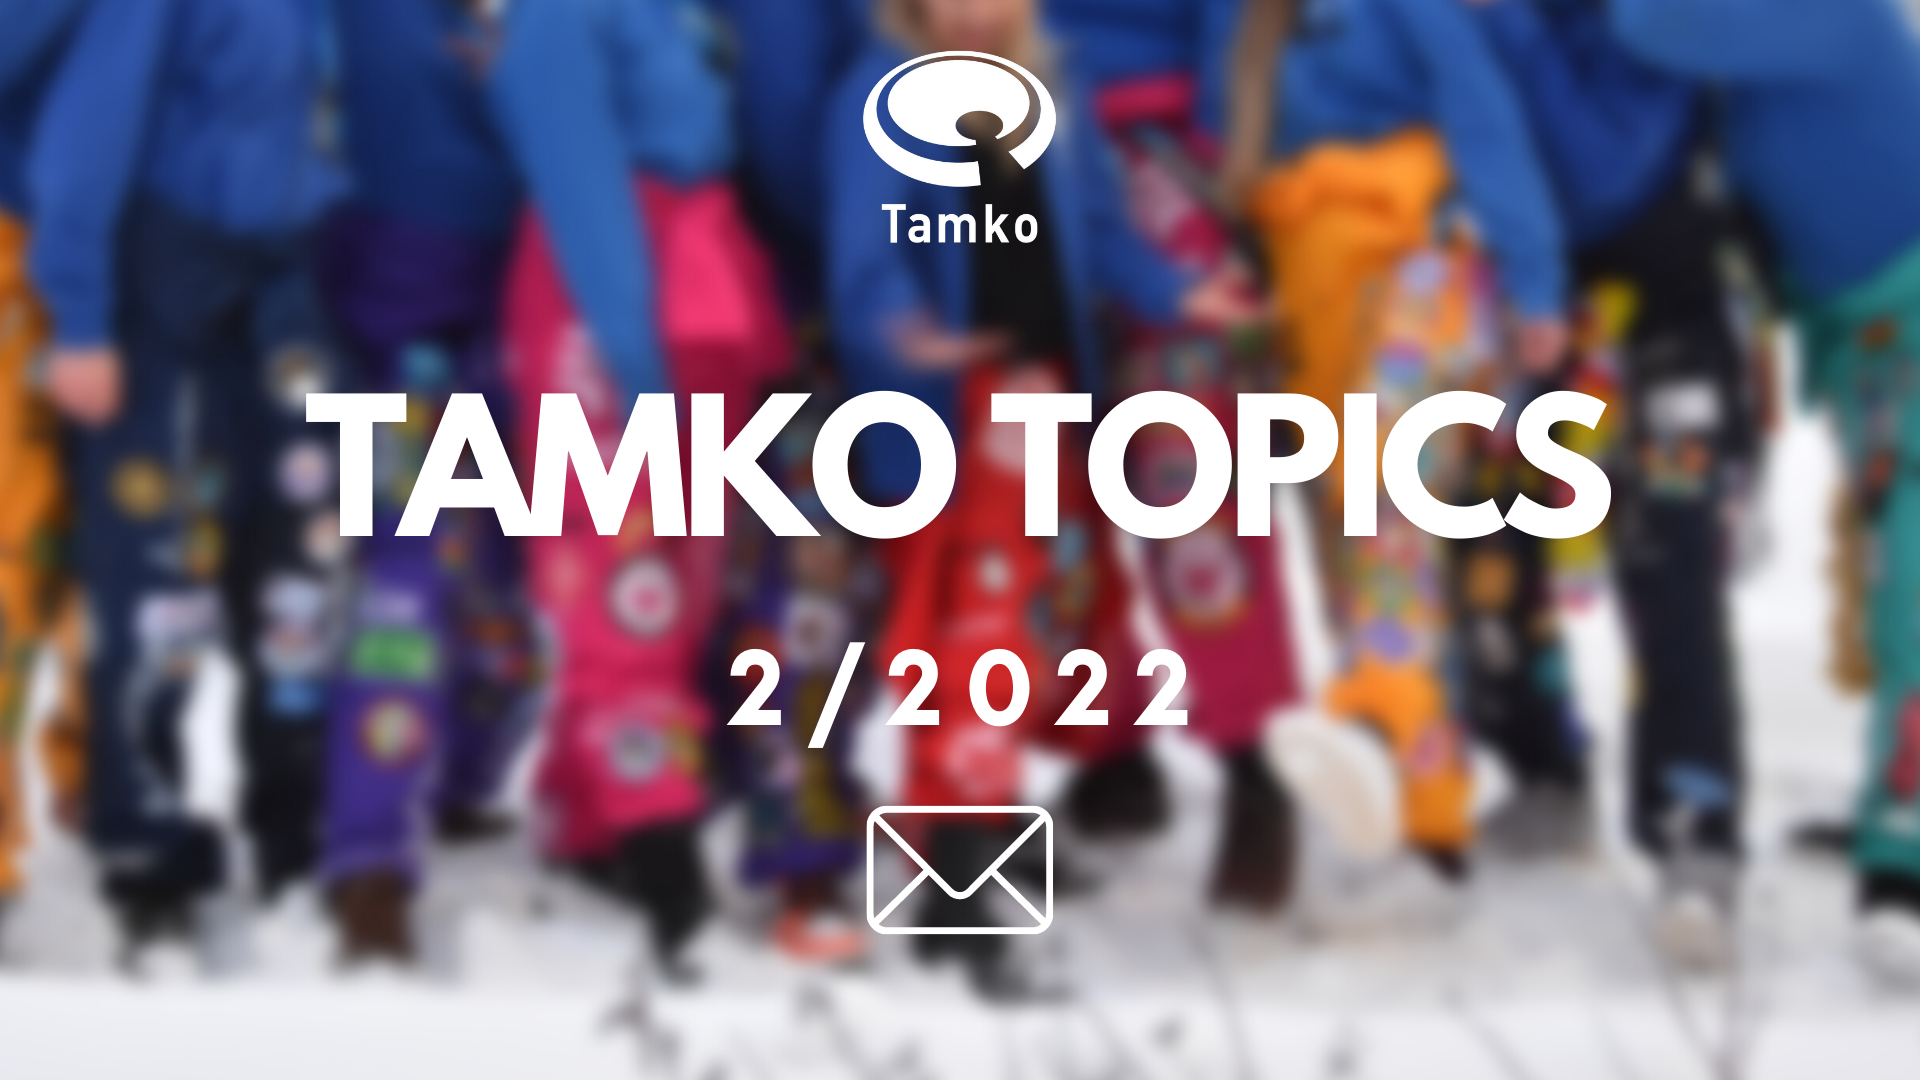 TAMKO TOPICS 2 / 2022